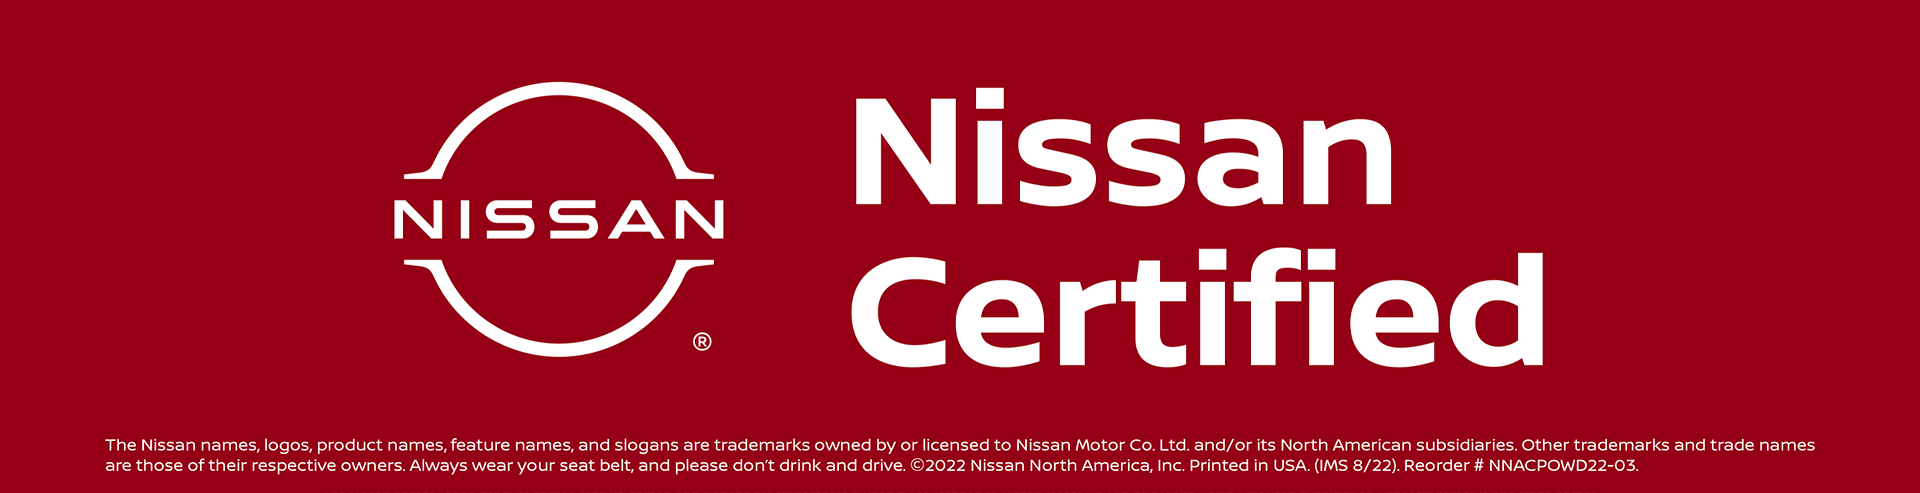 Nissan Certified_Banner_1920x493